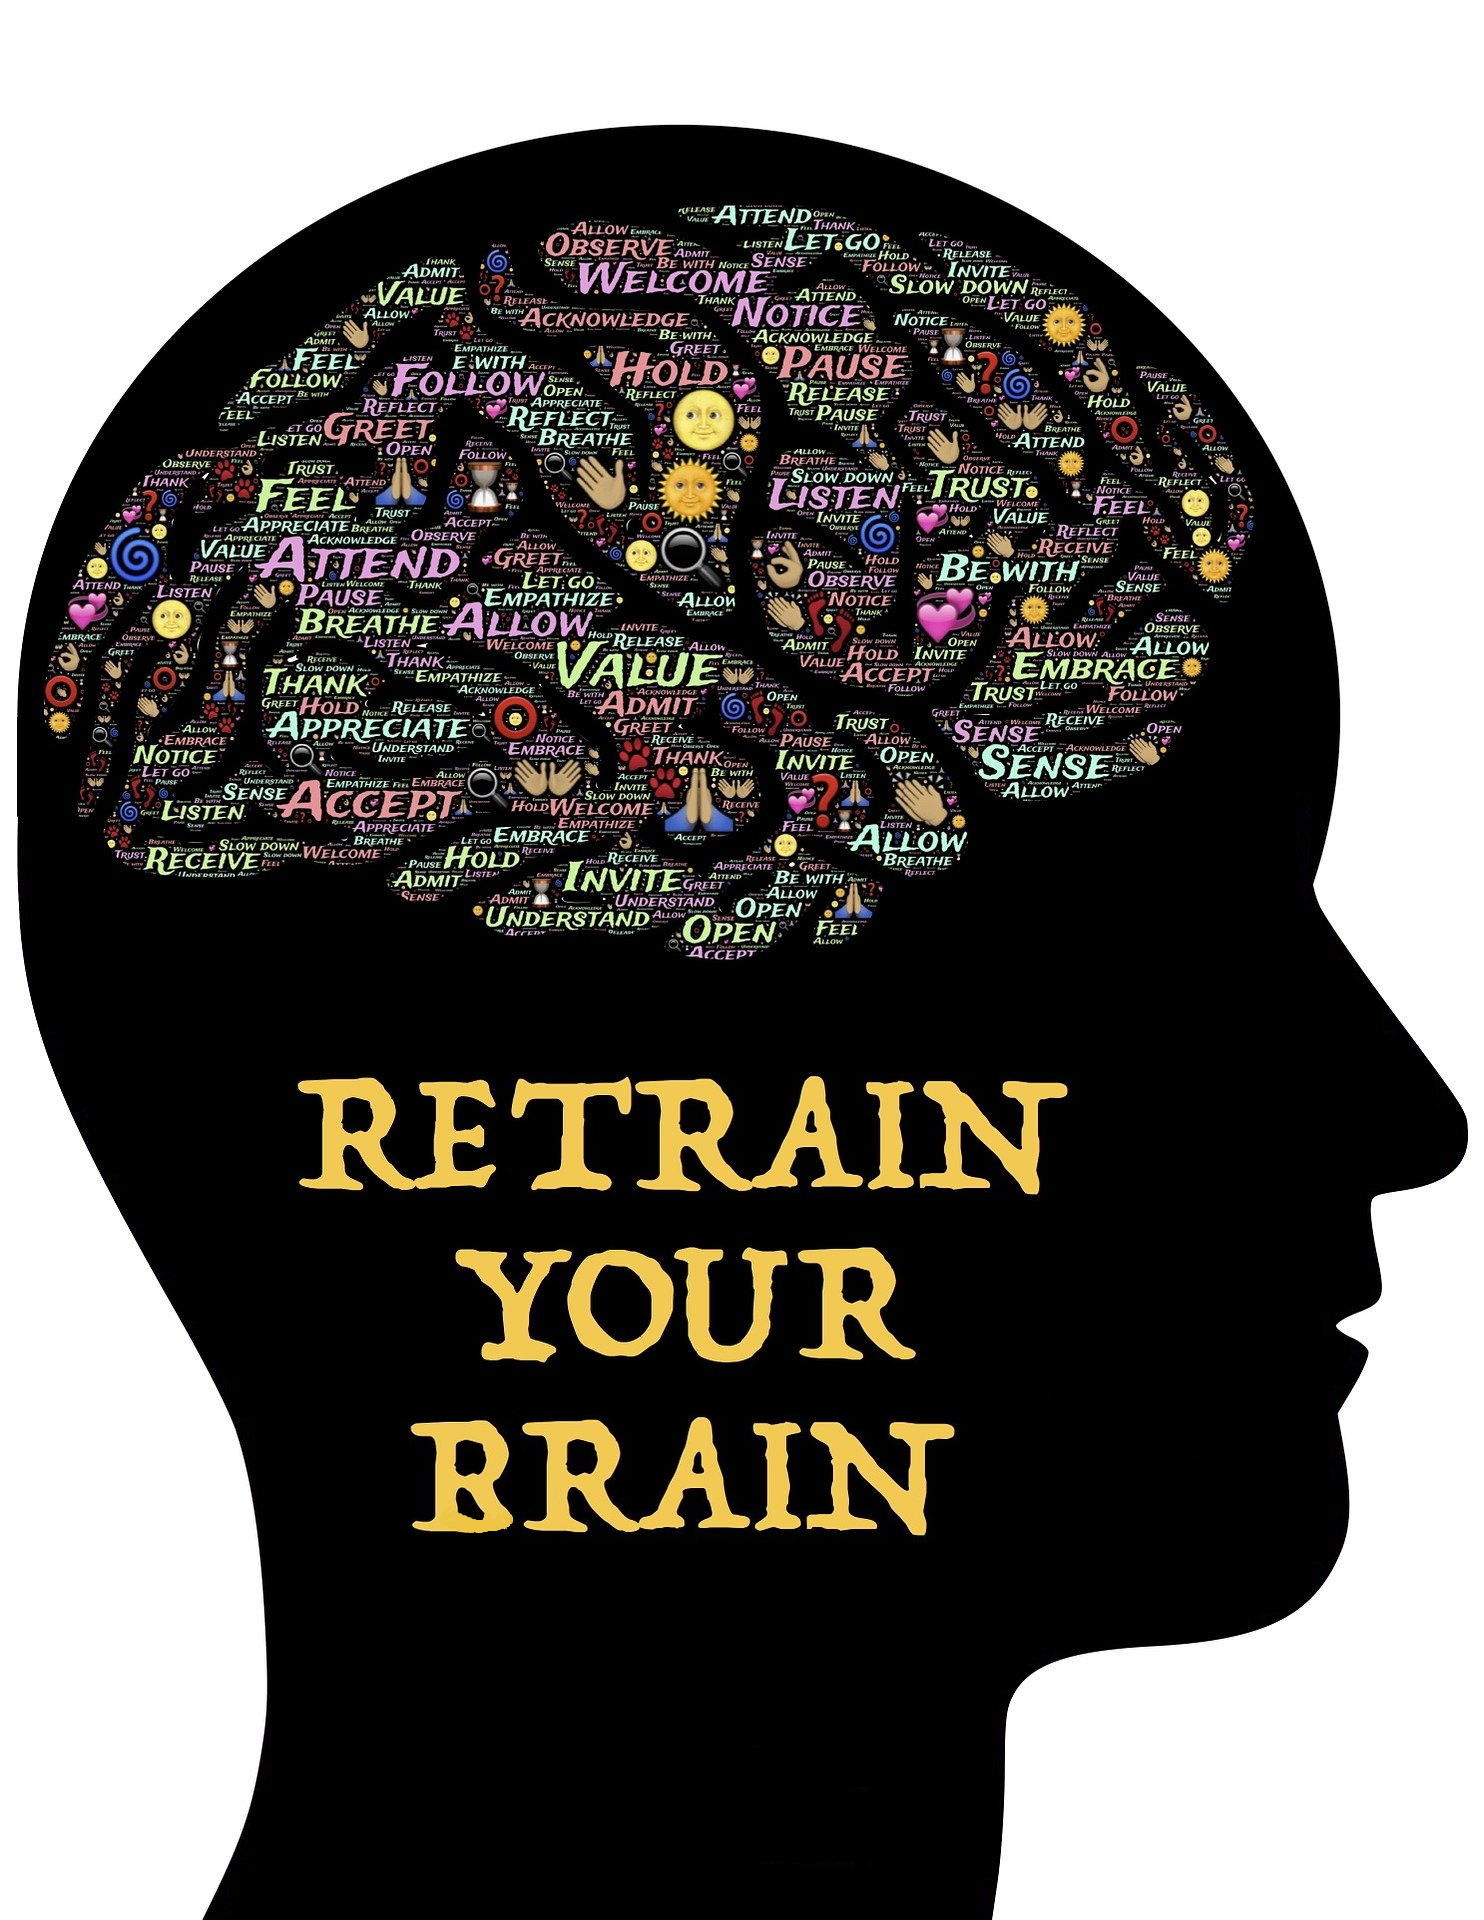 Retrain your brain2